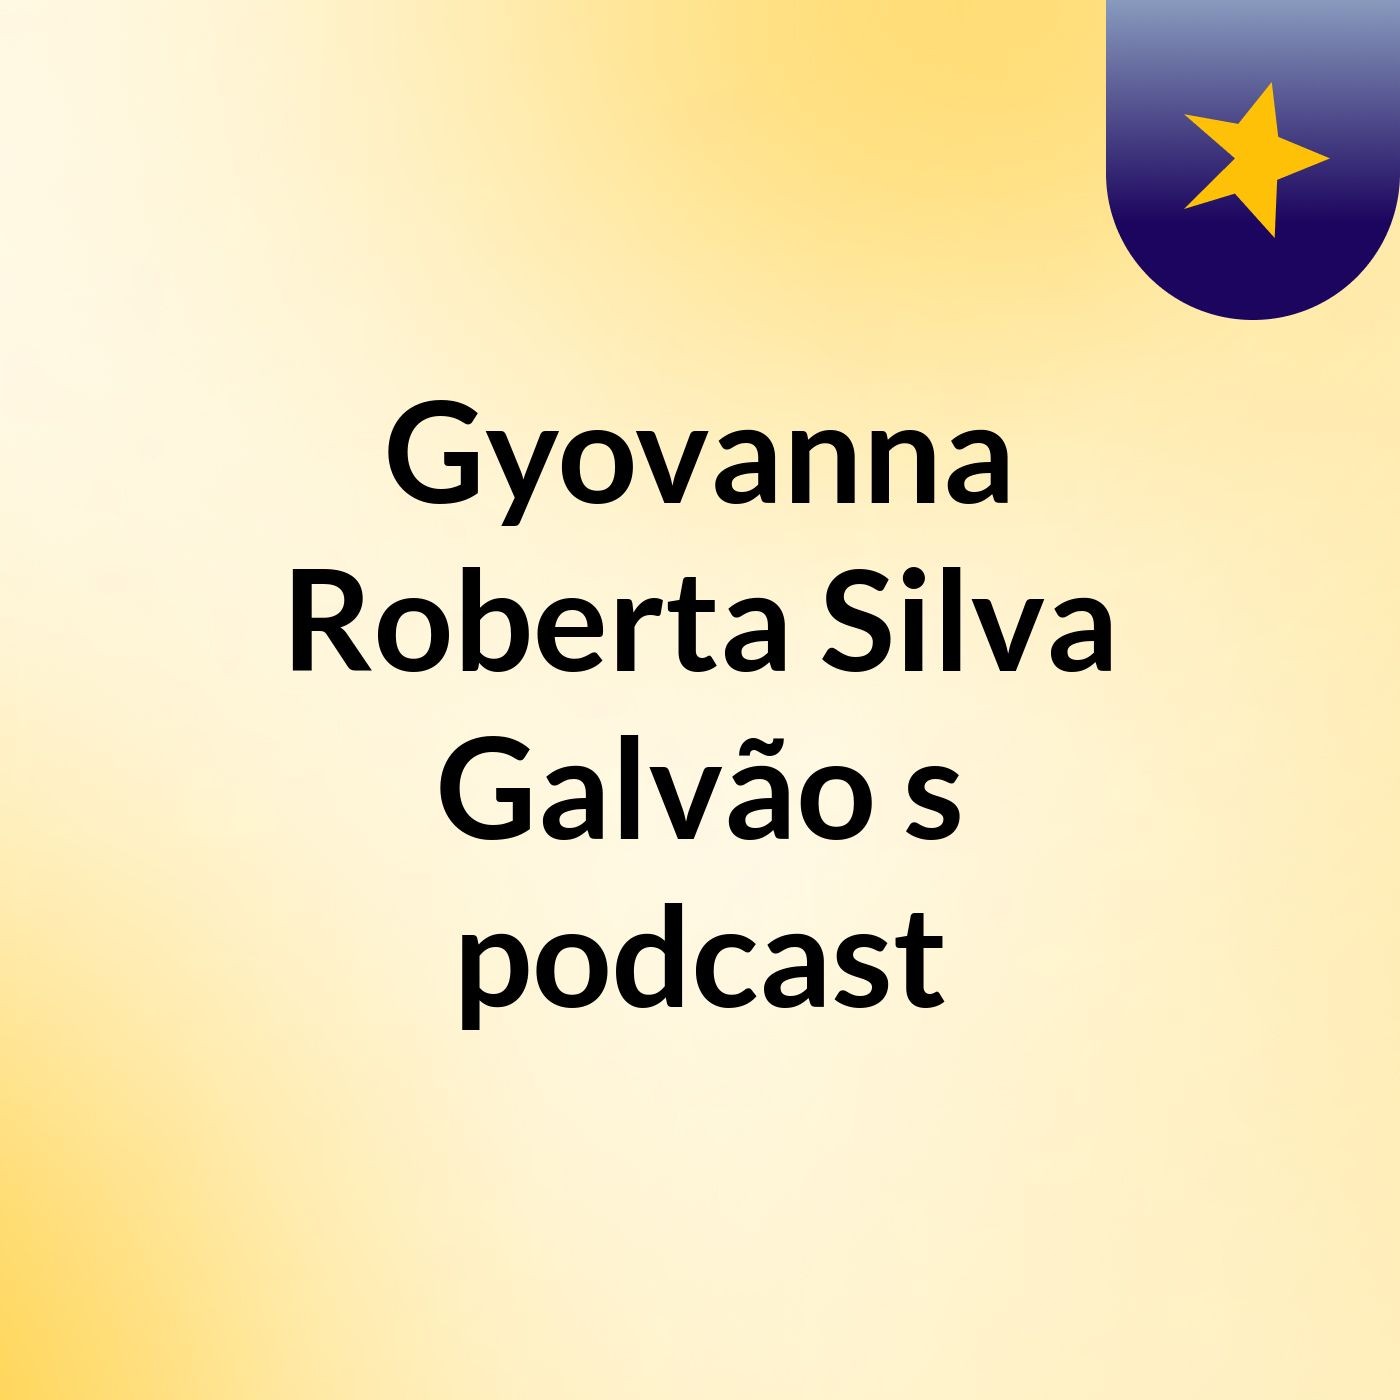 Gyovanna Roberta Silva Galvão's podcast